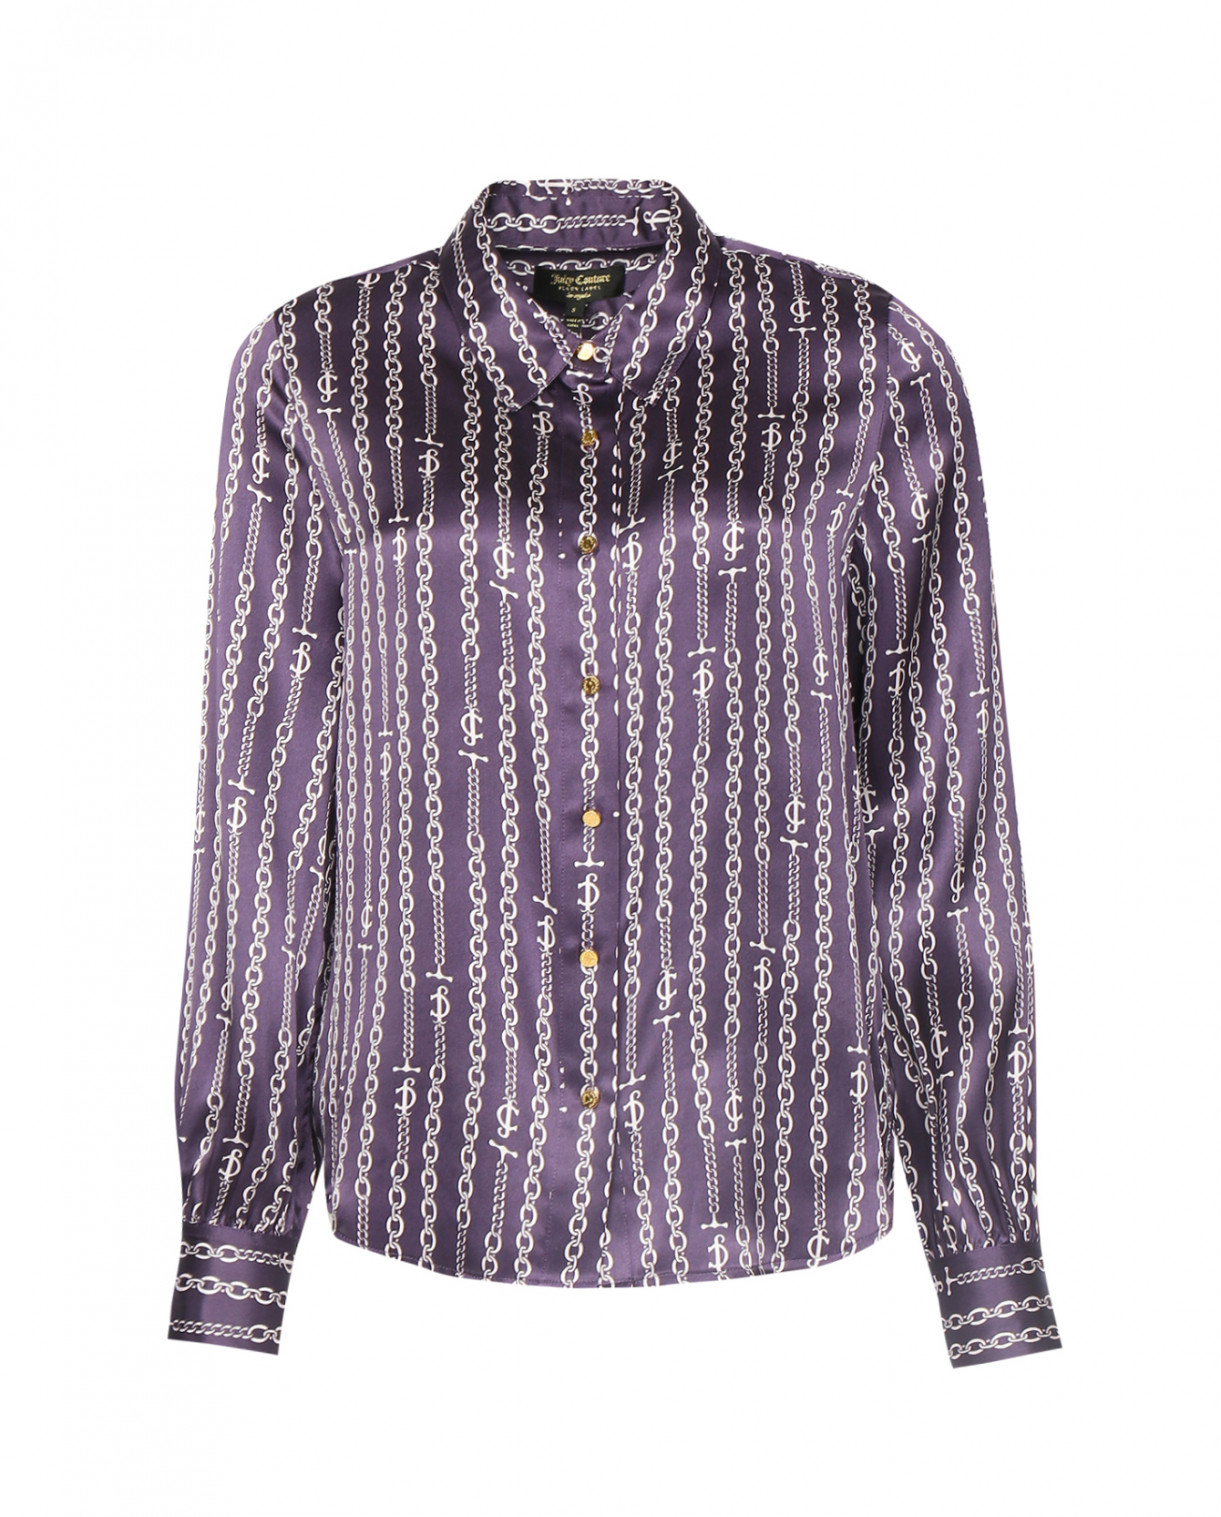 Блуза из шелка с узором Juicy Couture  –  Общий вид  – Цвет:  Синий